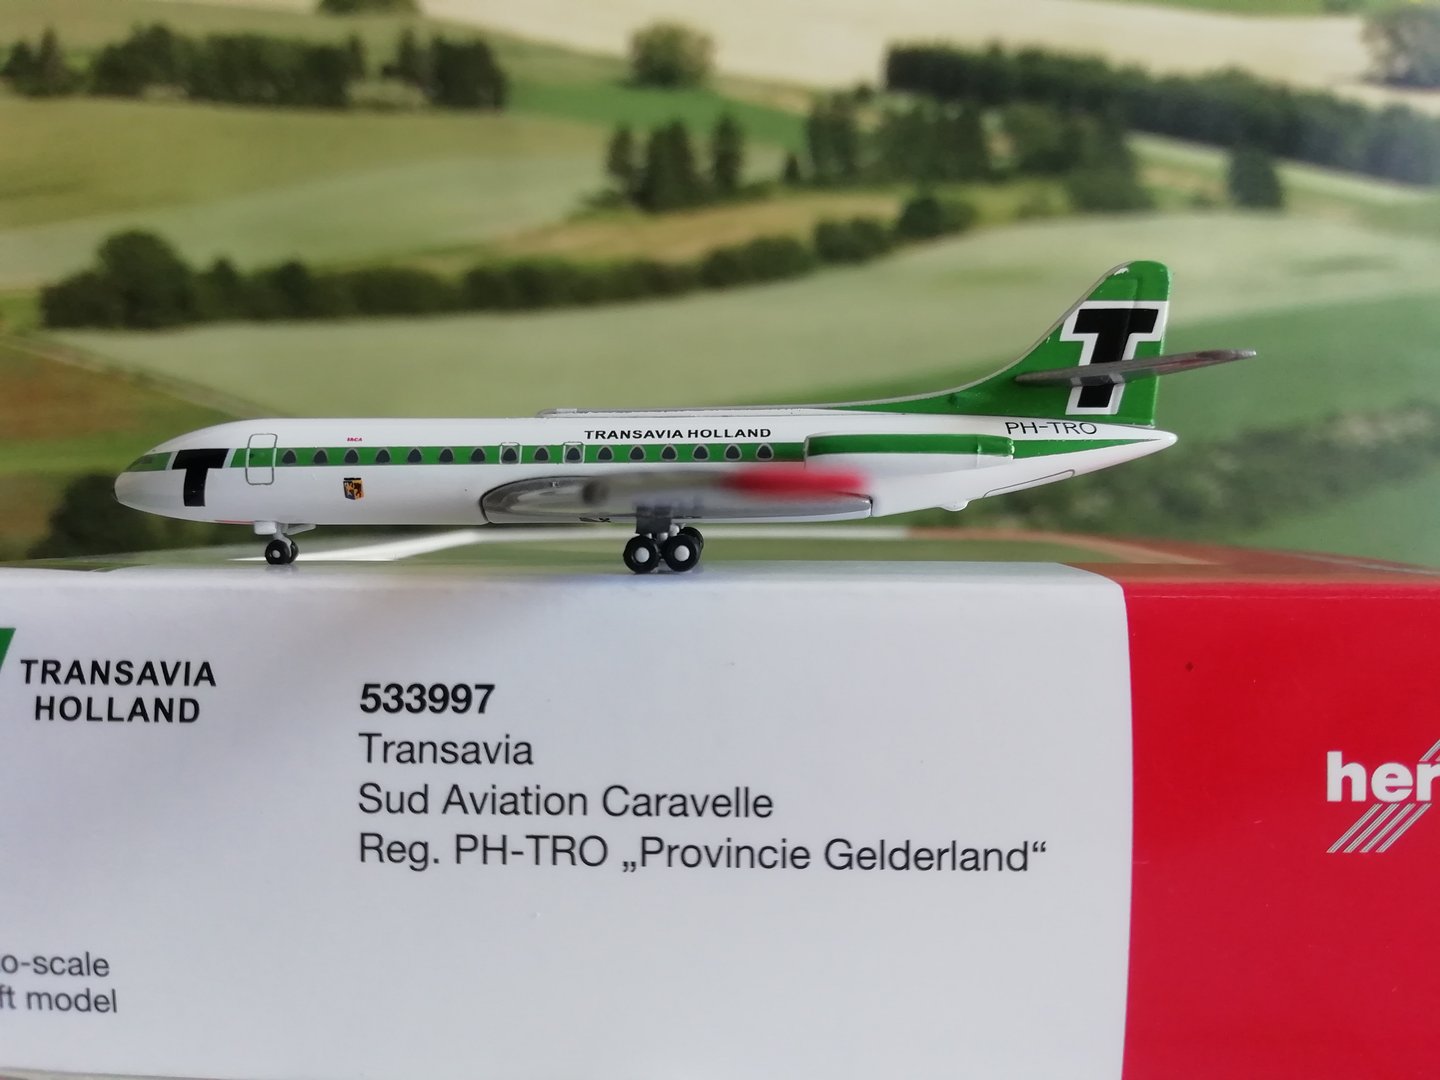 Herpa Wings 1:500 533997 Transavia Sud Aviation Caravelle "Provincie Gelderland